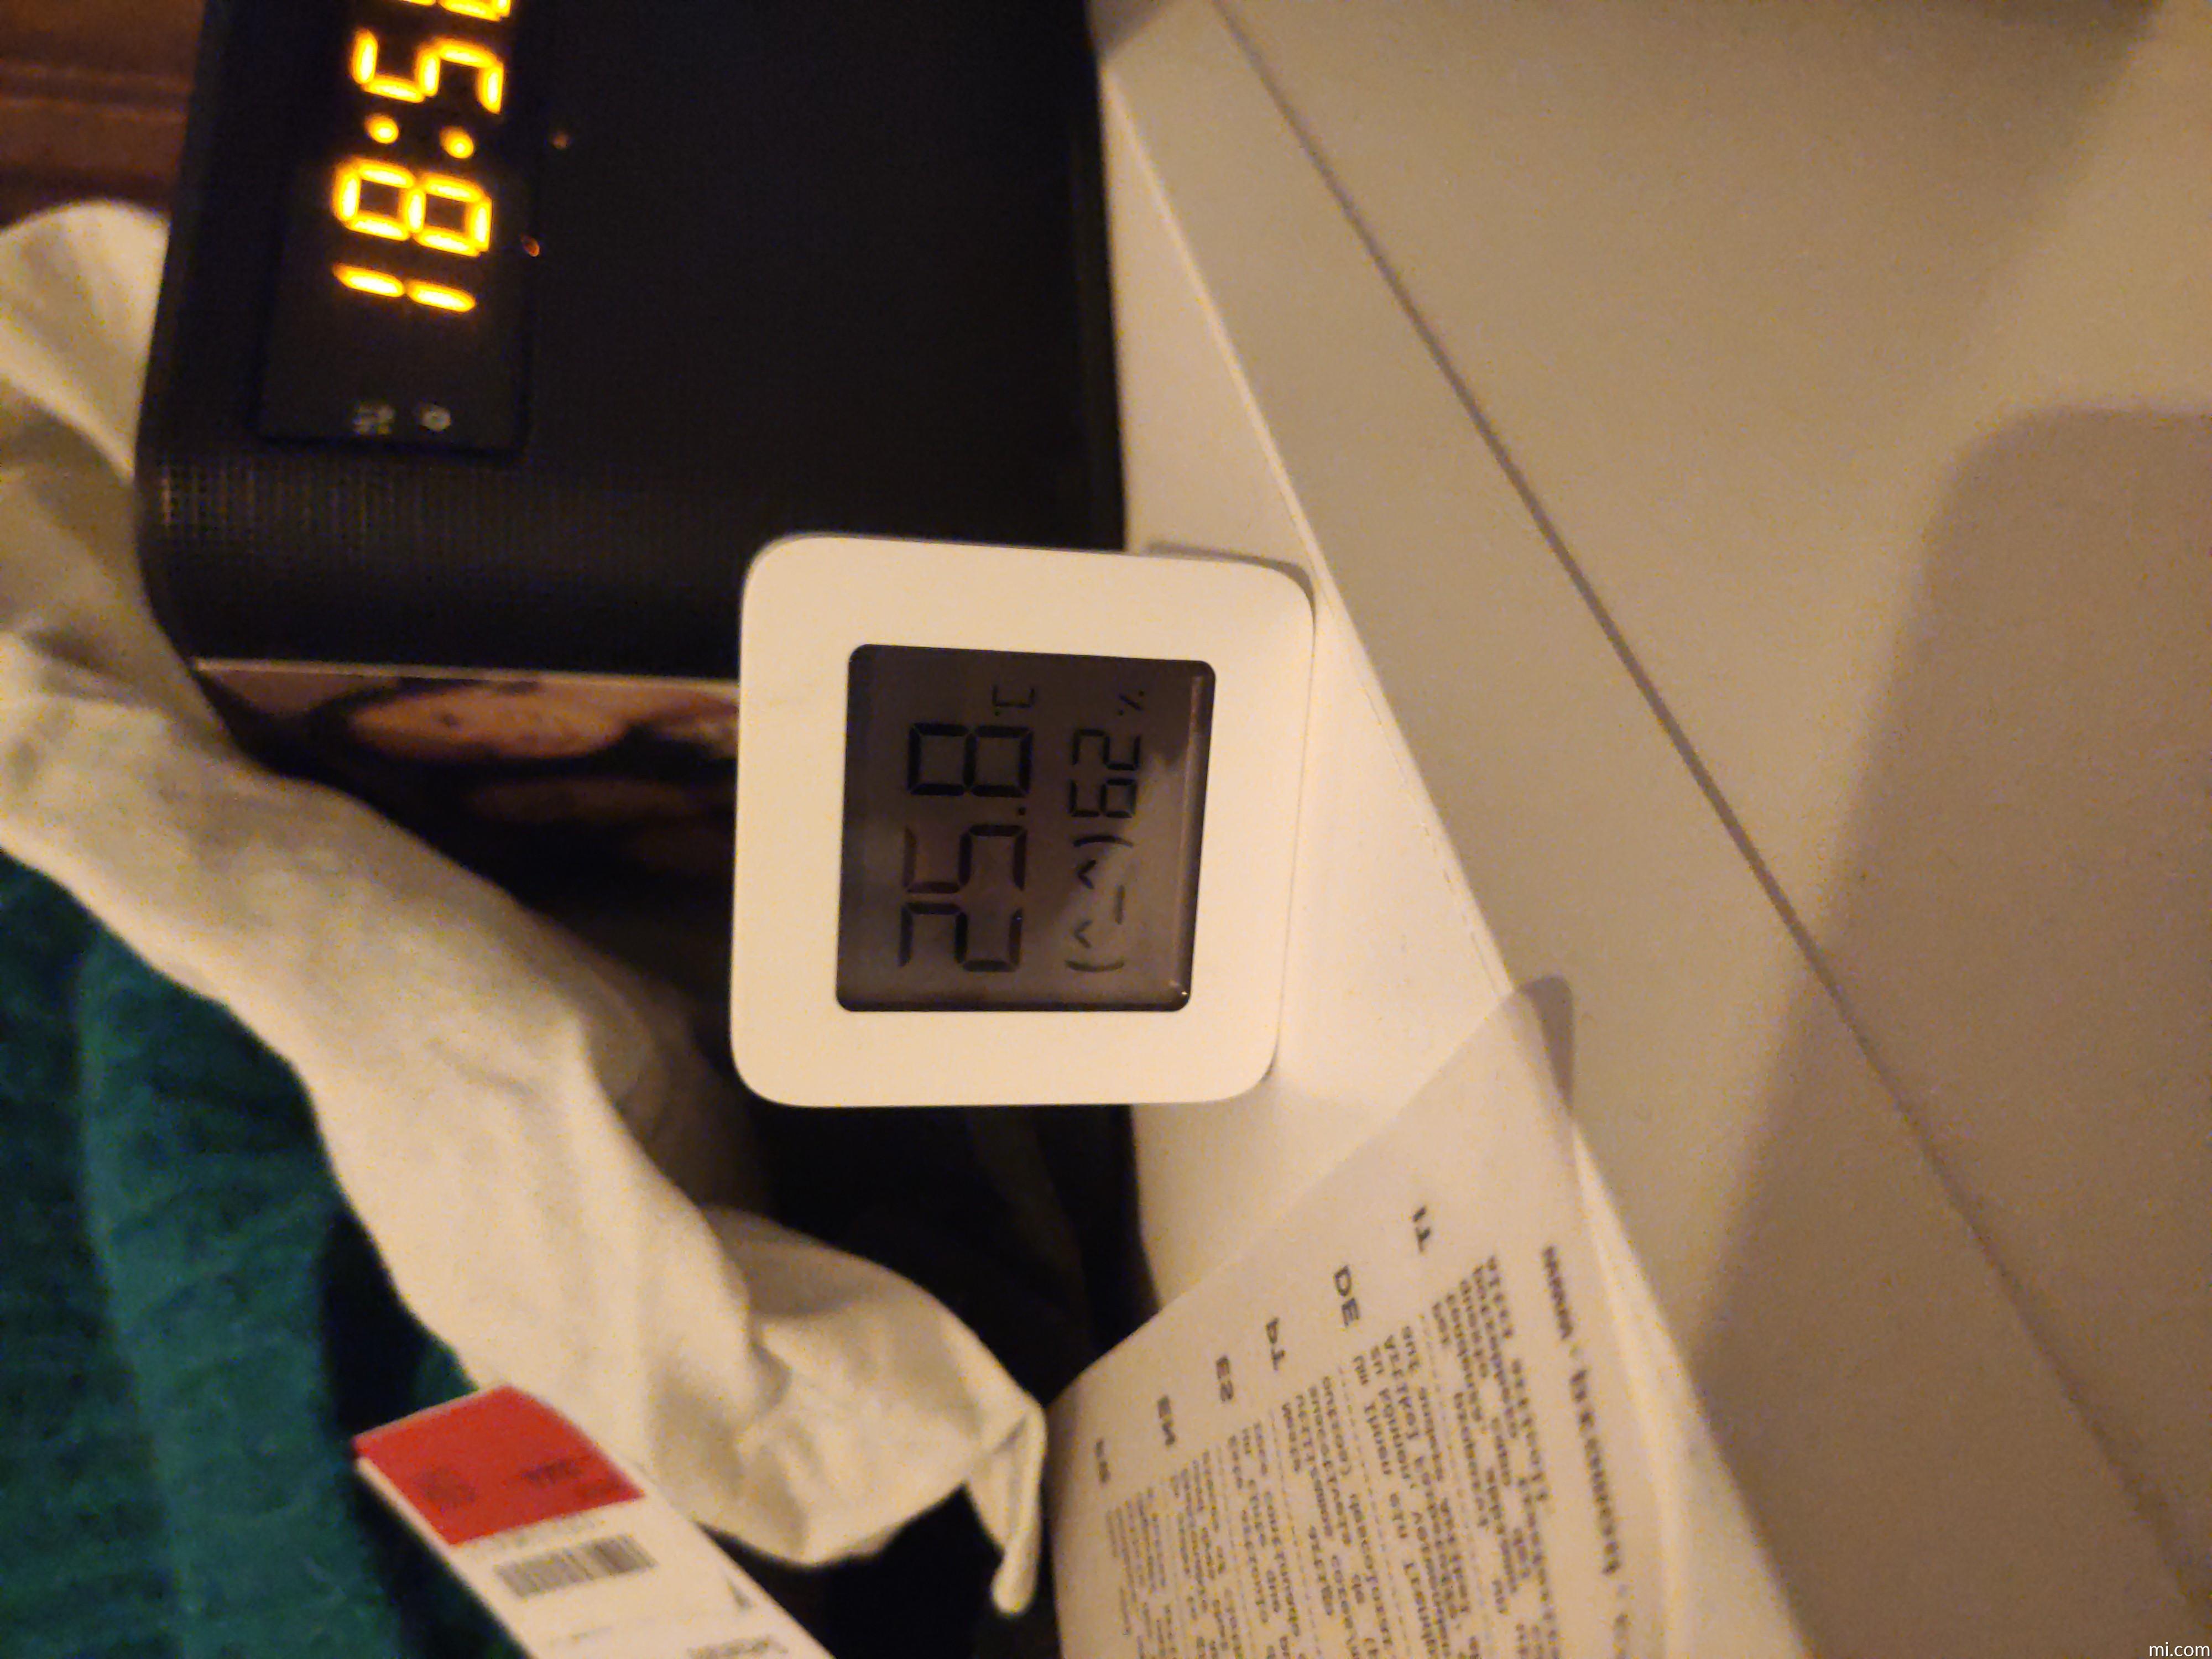 Capteur Xiaomi Mi Temperature and Humidity Monitor 2